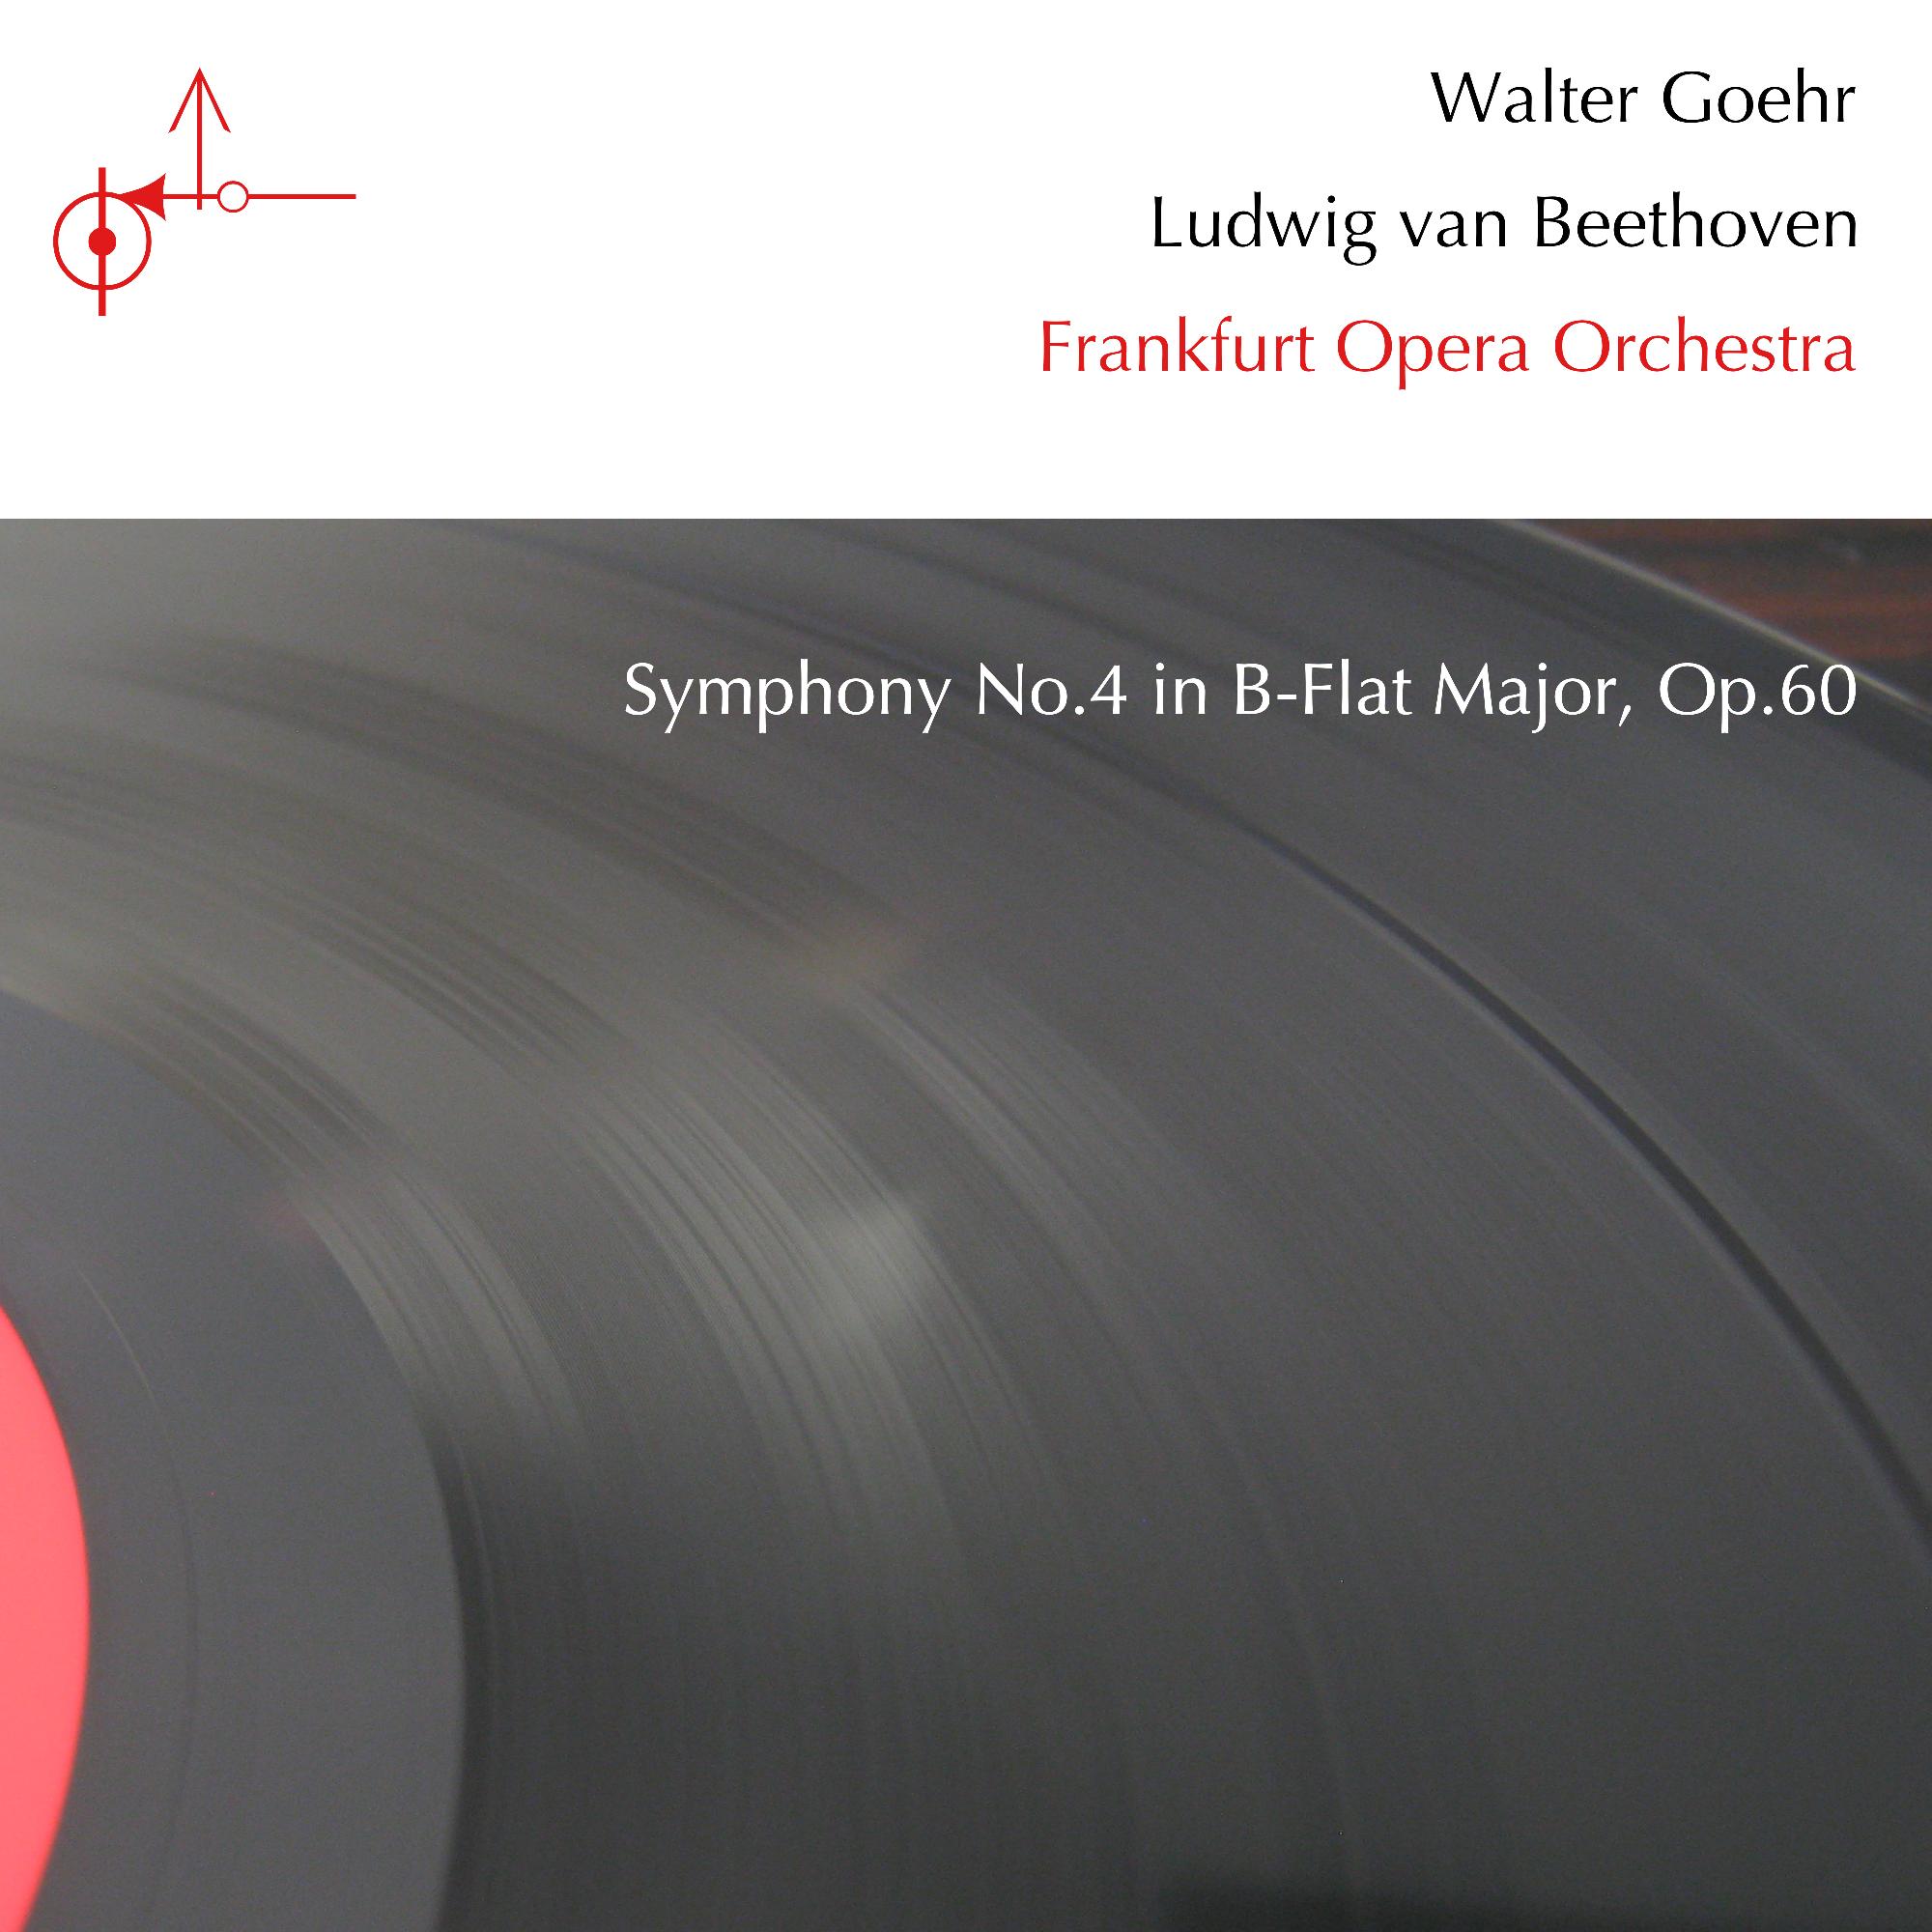 Symphony No. 4 in B-Flat Major, Op. 60: III. Menuetto - Allegro vivace